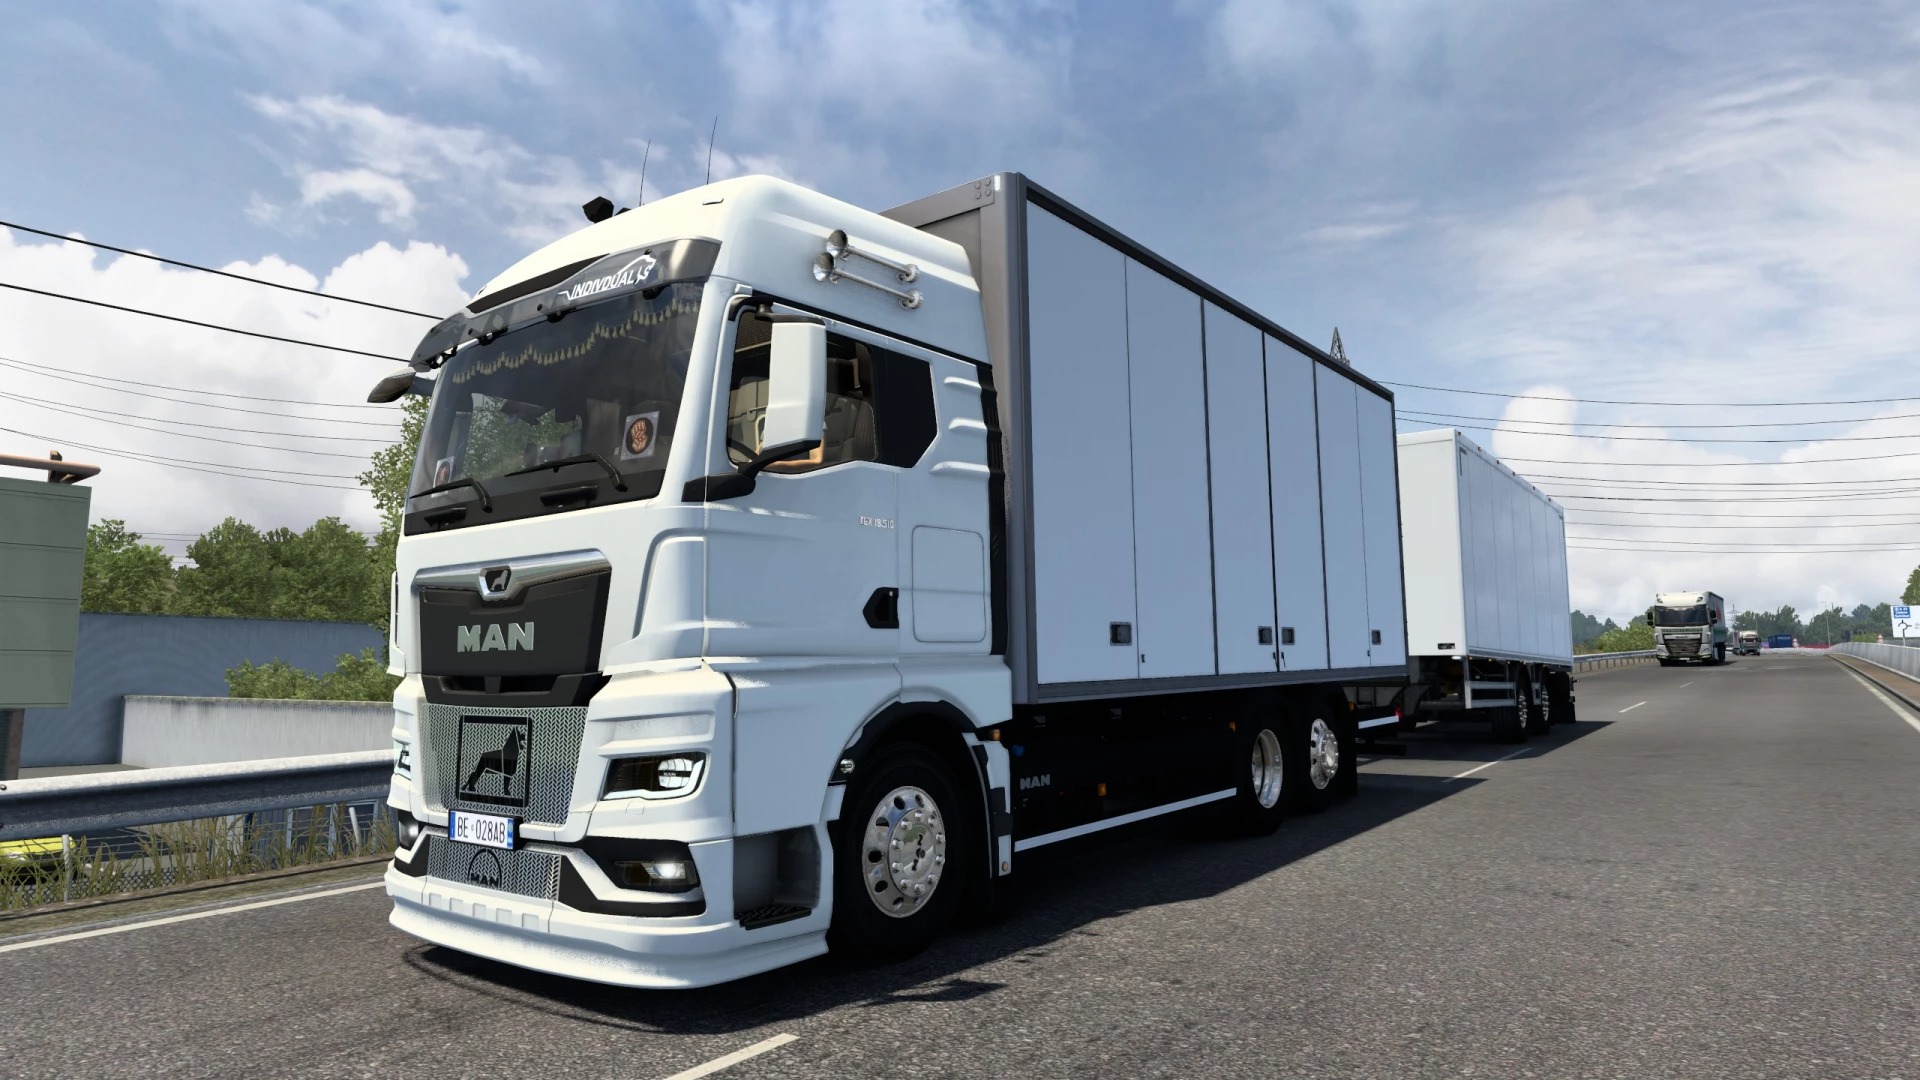 Man Tgx 2020 V60 By Hbb Store Last Version 143 Ets 2 Mods Ets2 Map Euro Truck Simulator 2 0626